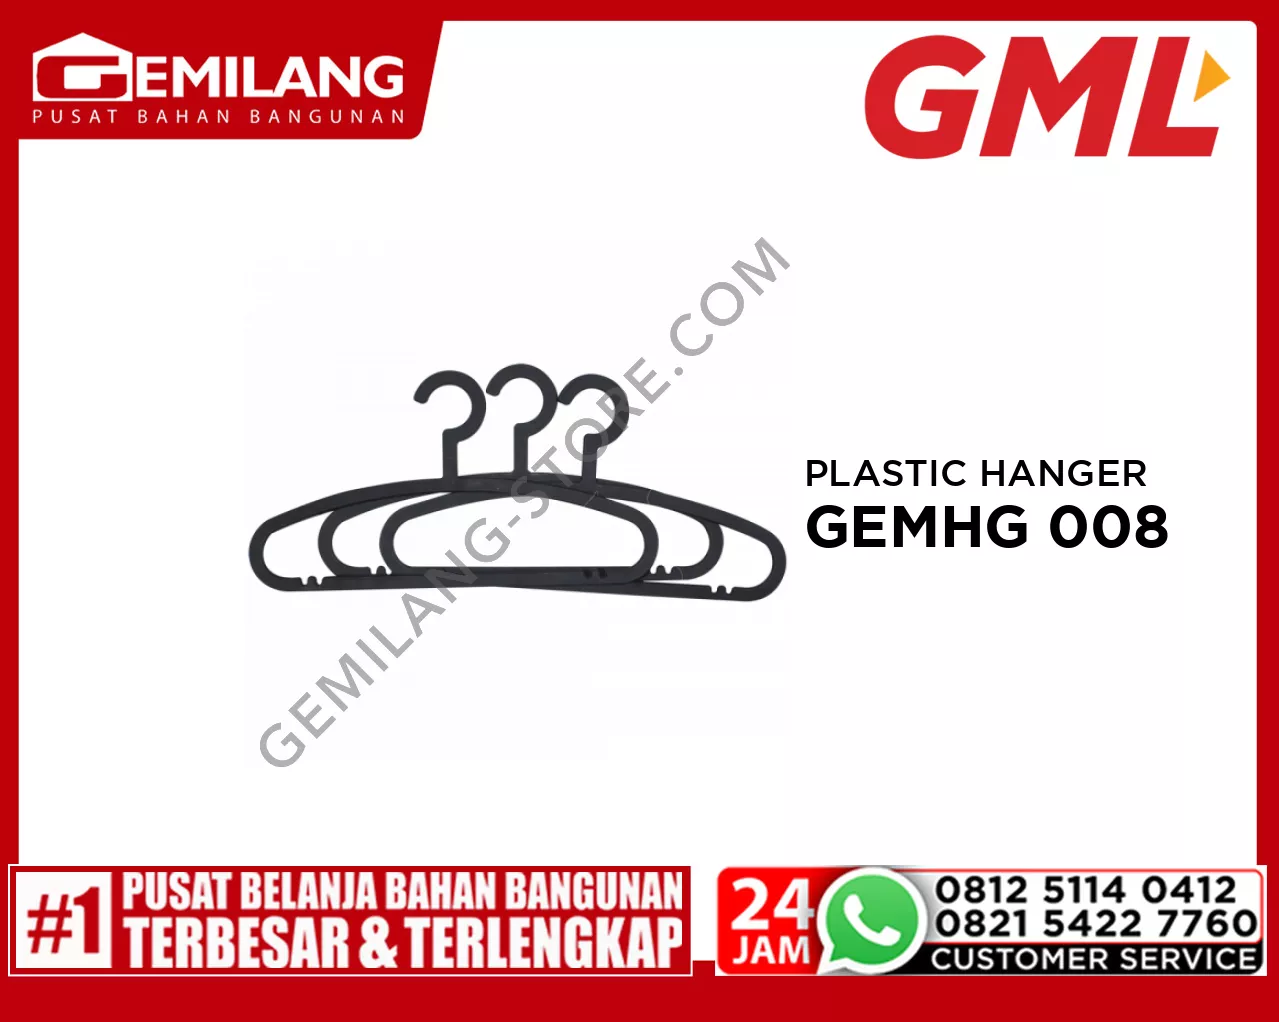 GML PLASTIC HANGER U/ADULT GEMHG 008/3pc